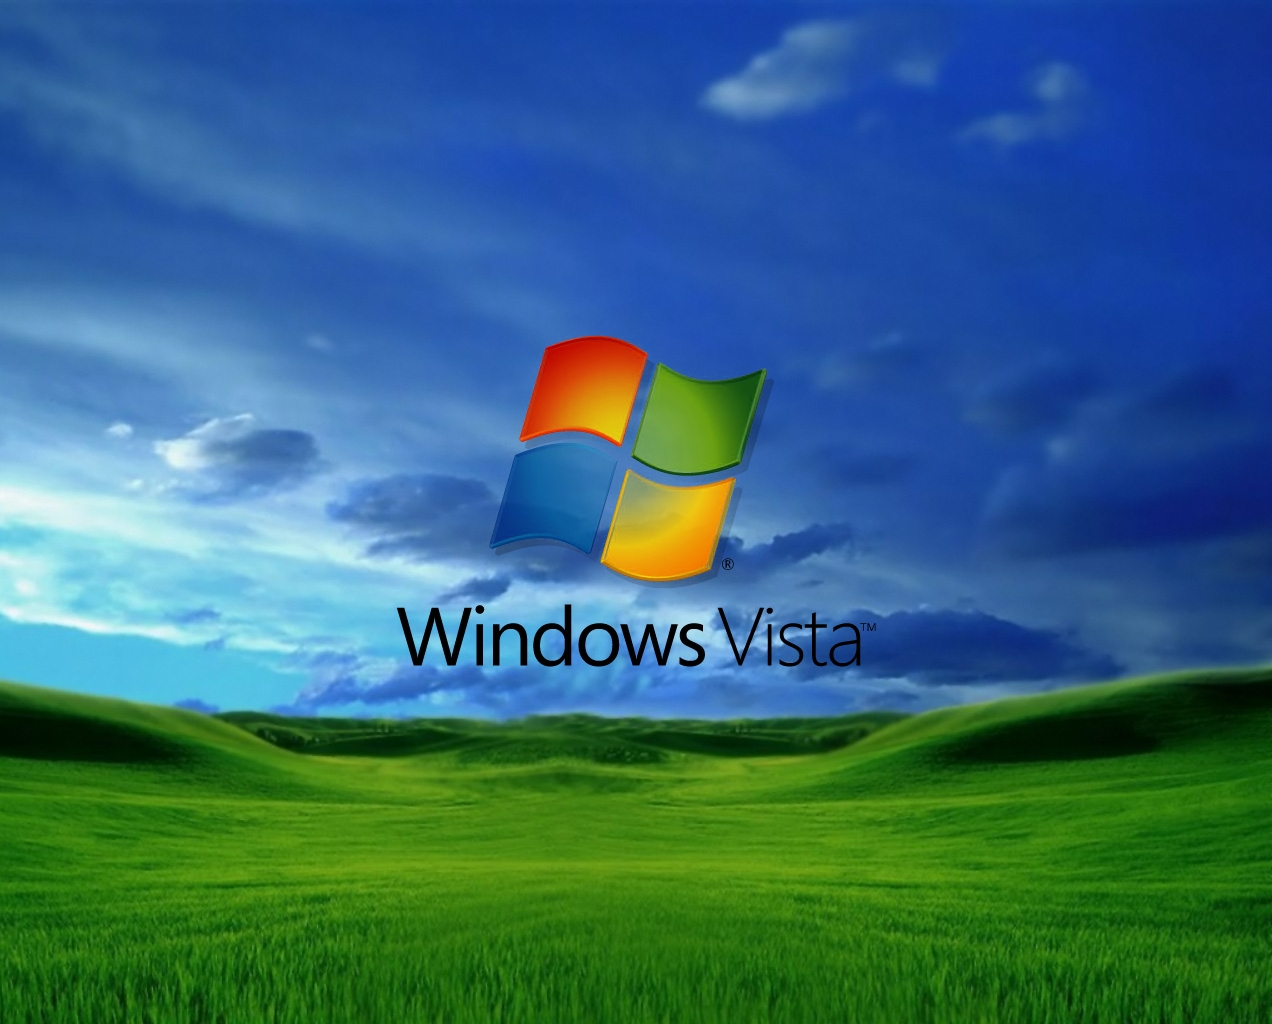 Windows Vista Vibrant Landscape Wallpaper Geekpedia